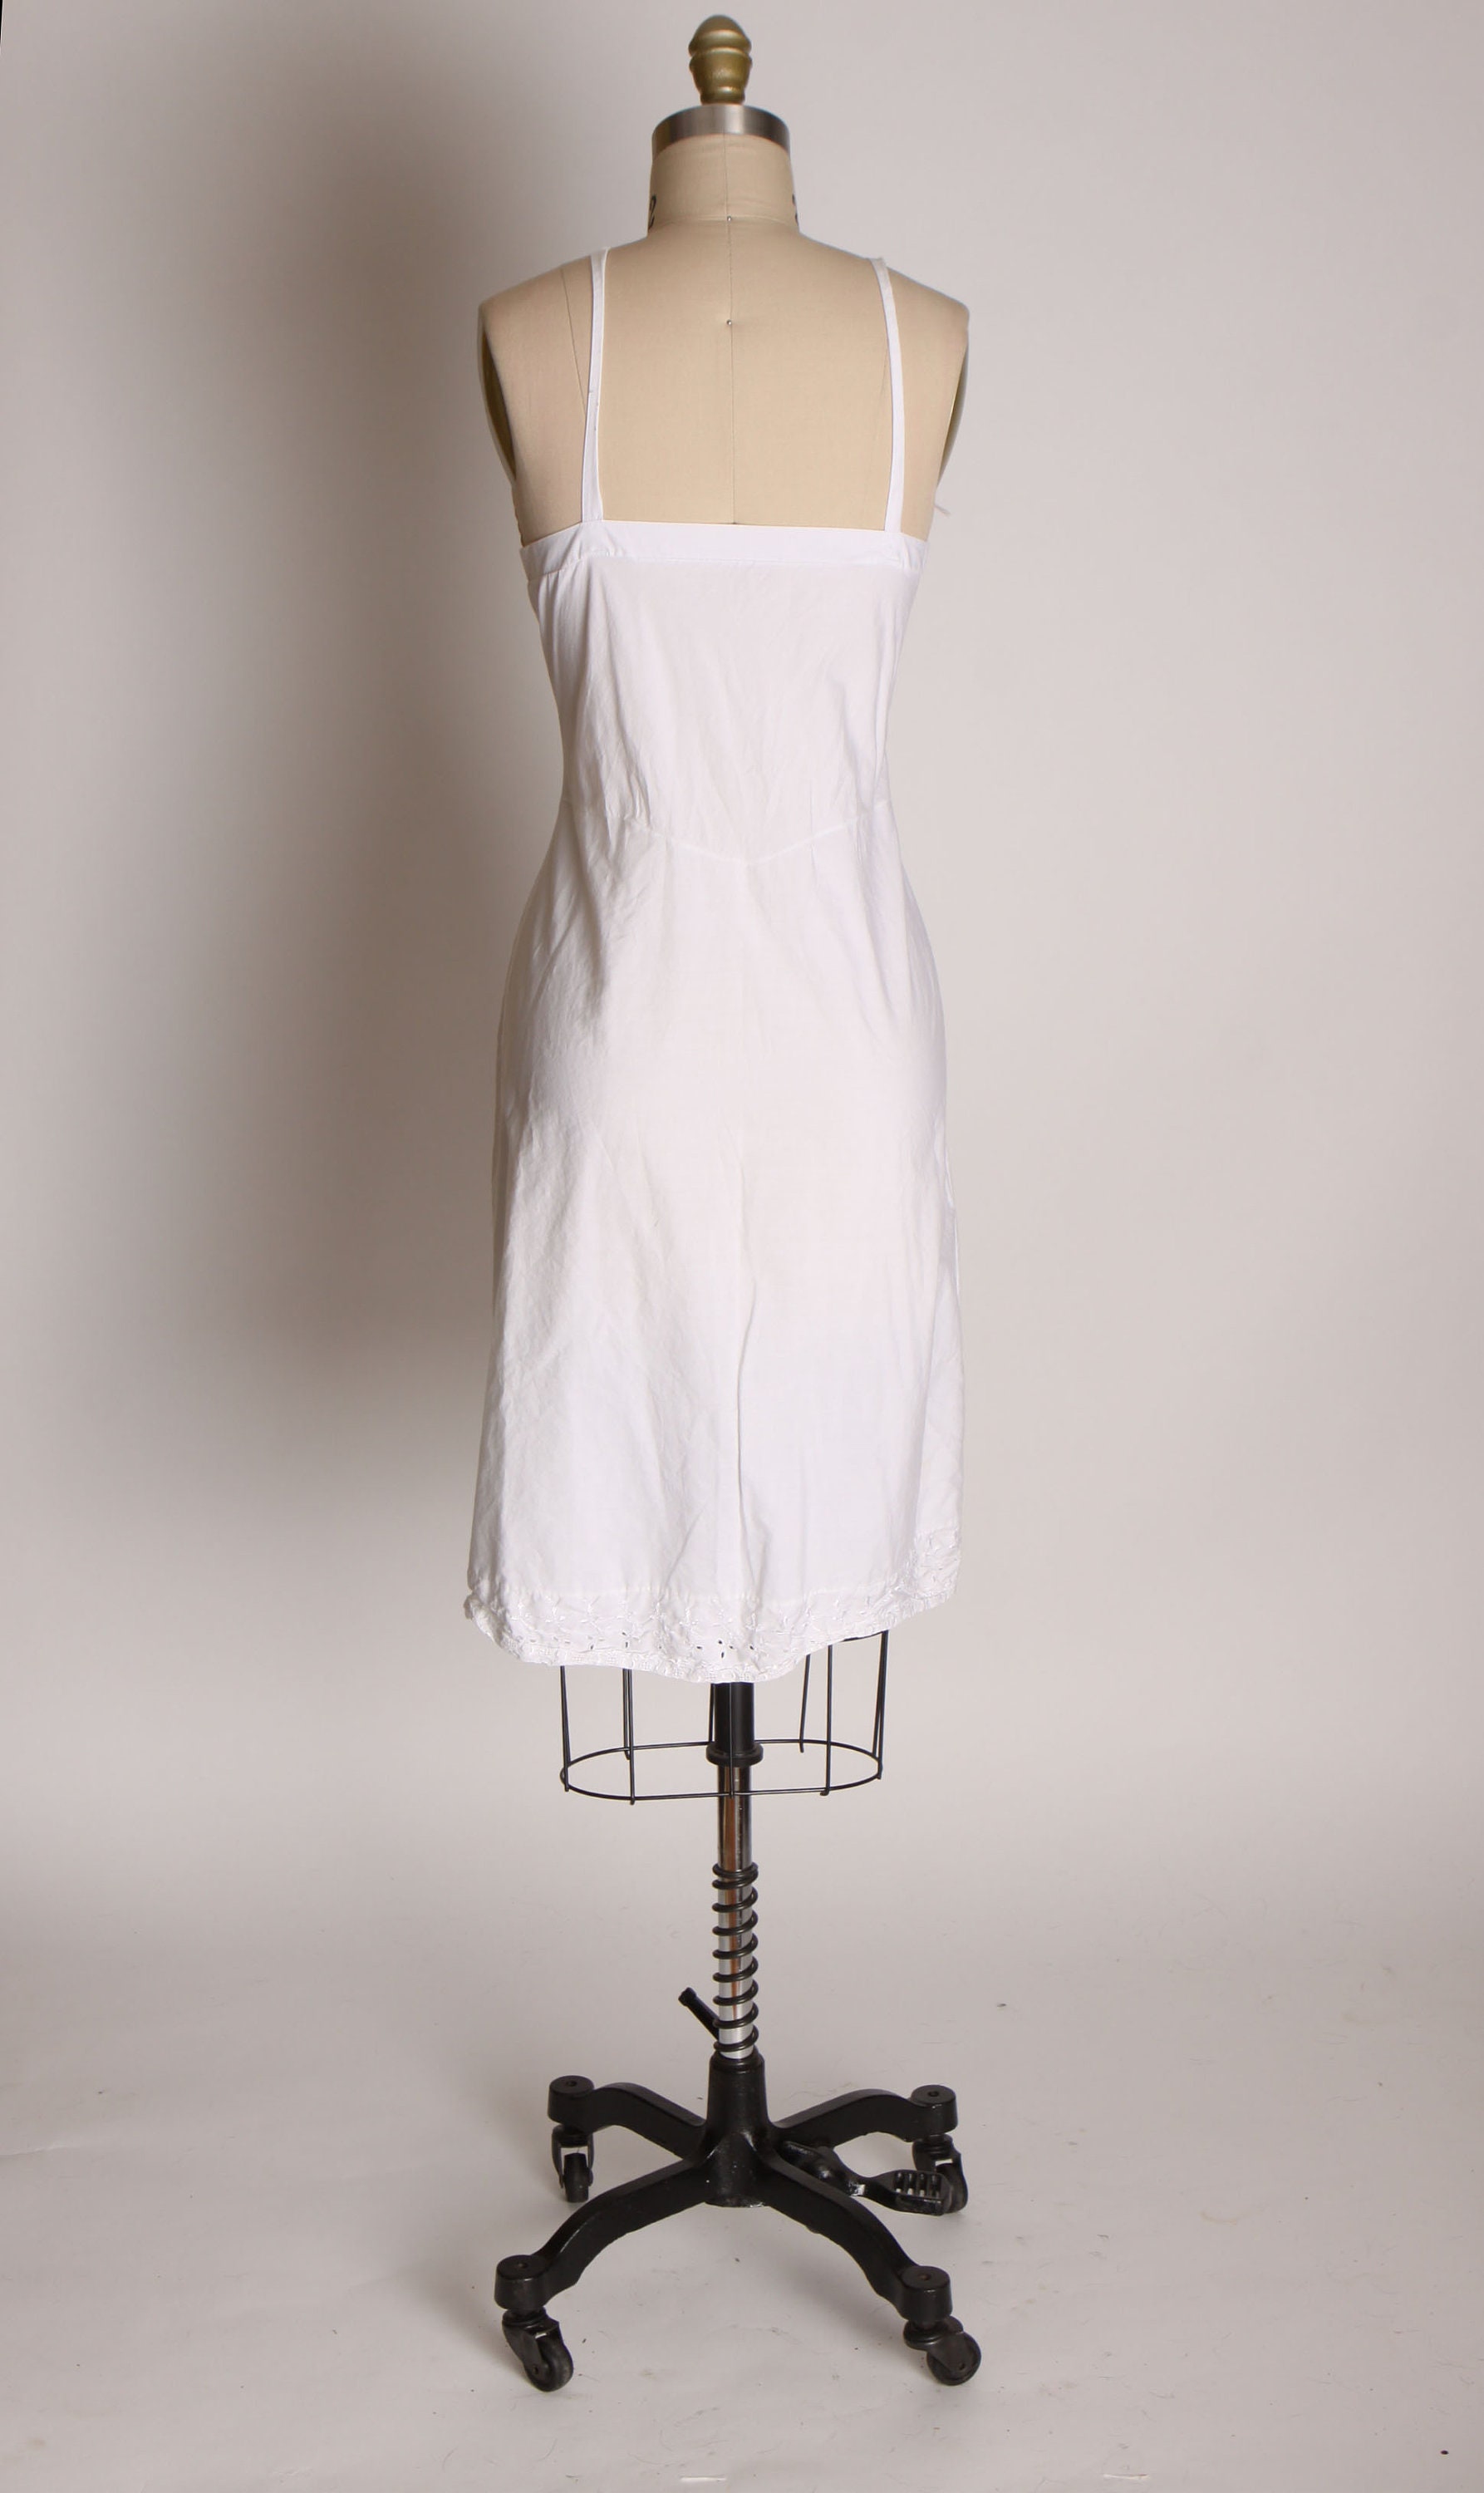 1940s White Cotton Eyelet Lace Lingerie Dress Slip -M